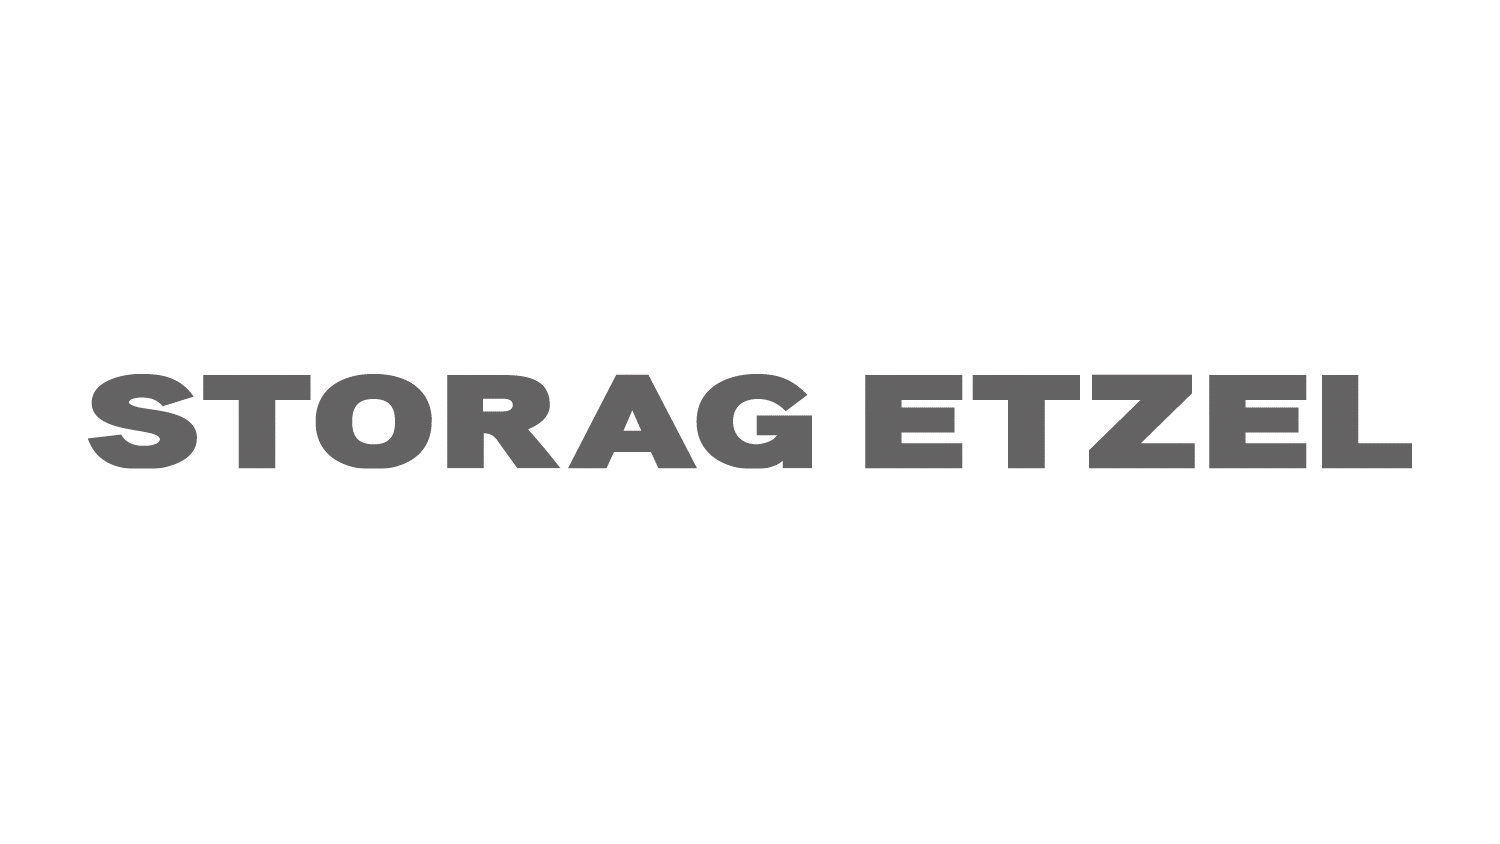 Animation: STORAG ETZEL logo becomes ESG lettering